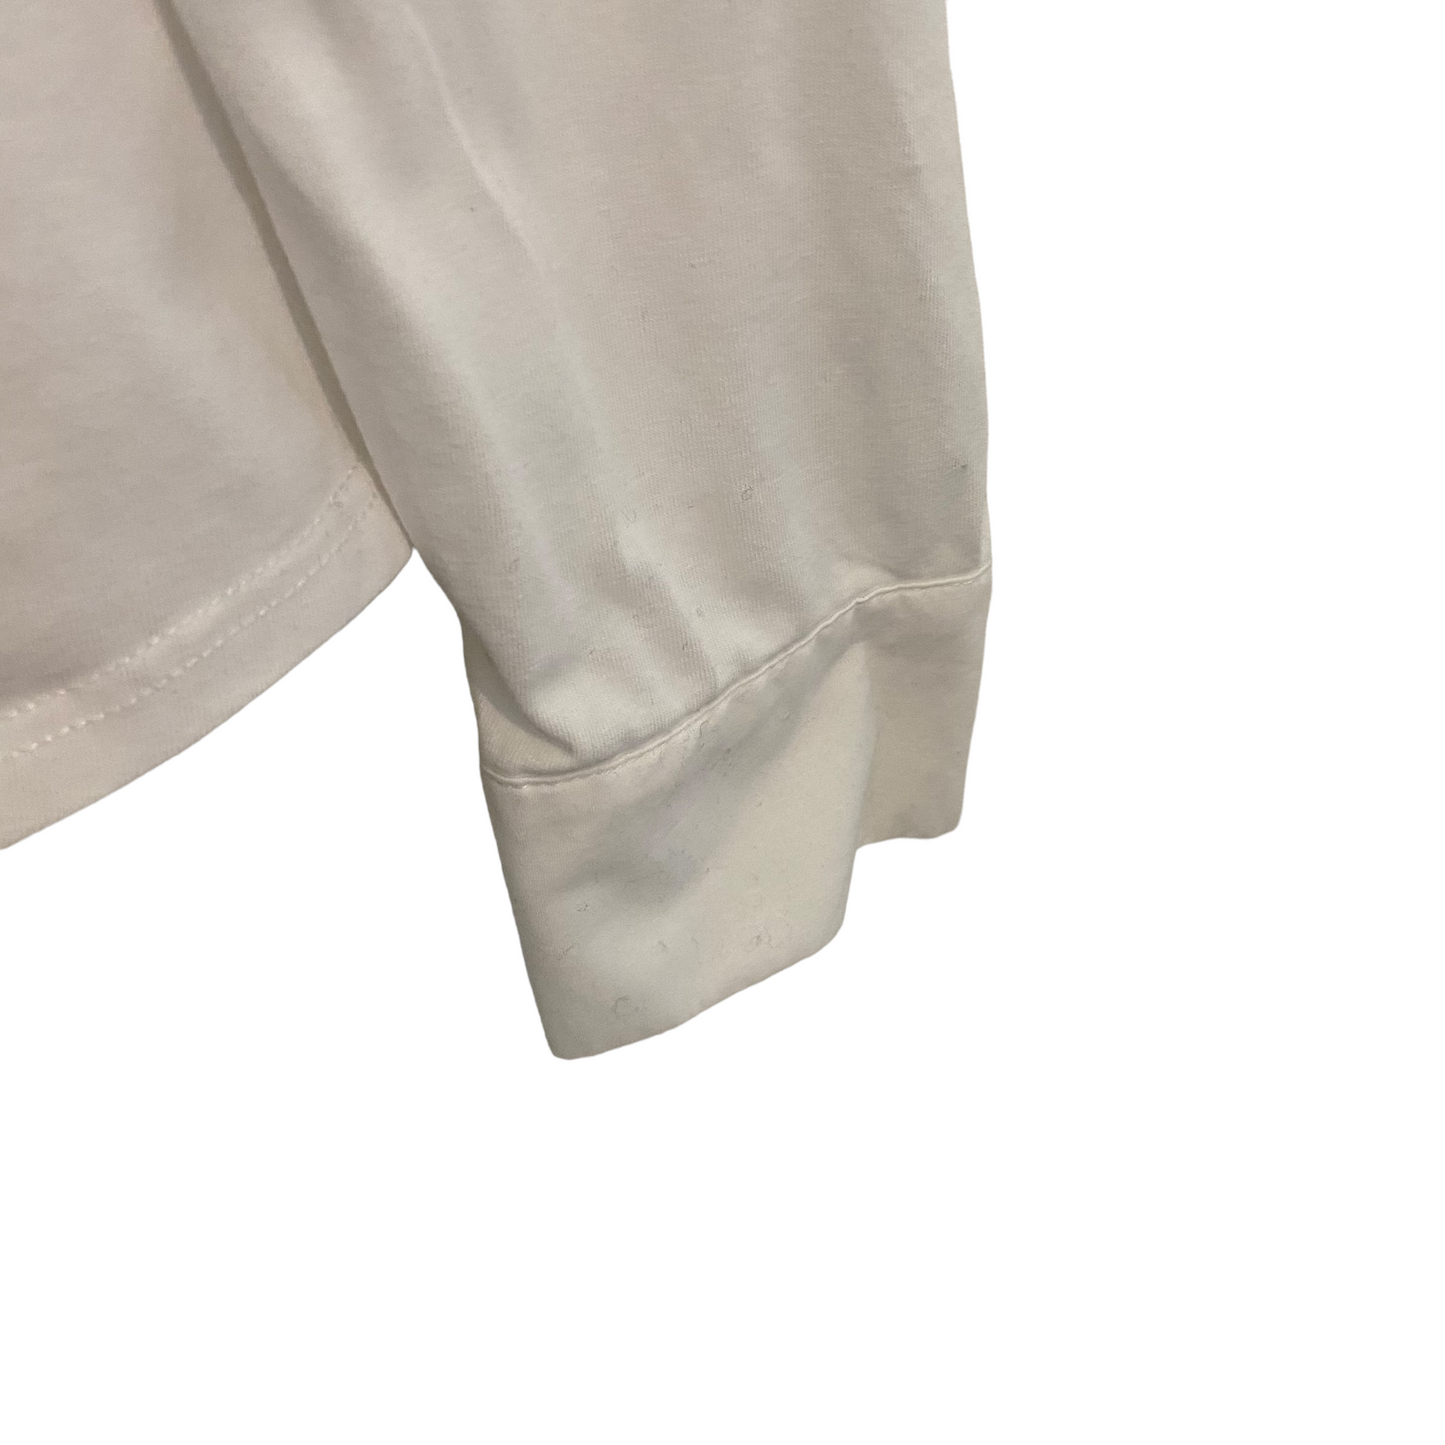 Soft Cotton Button Up ‘Tuxedo’ Shirt Size Medium